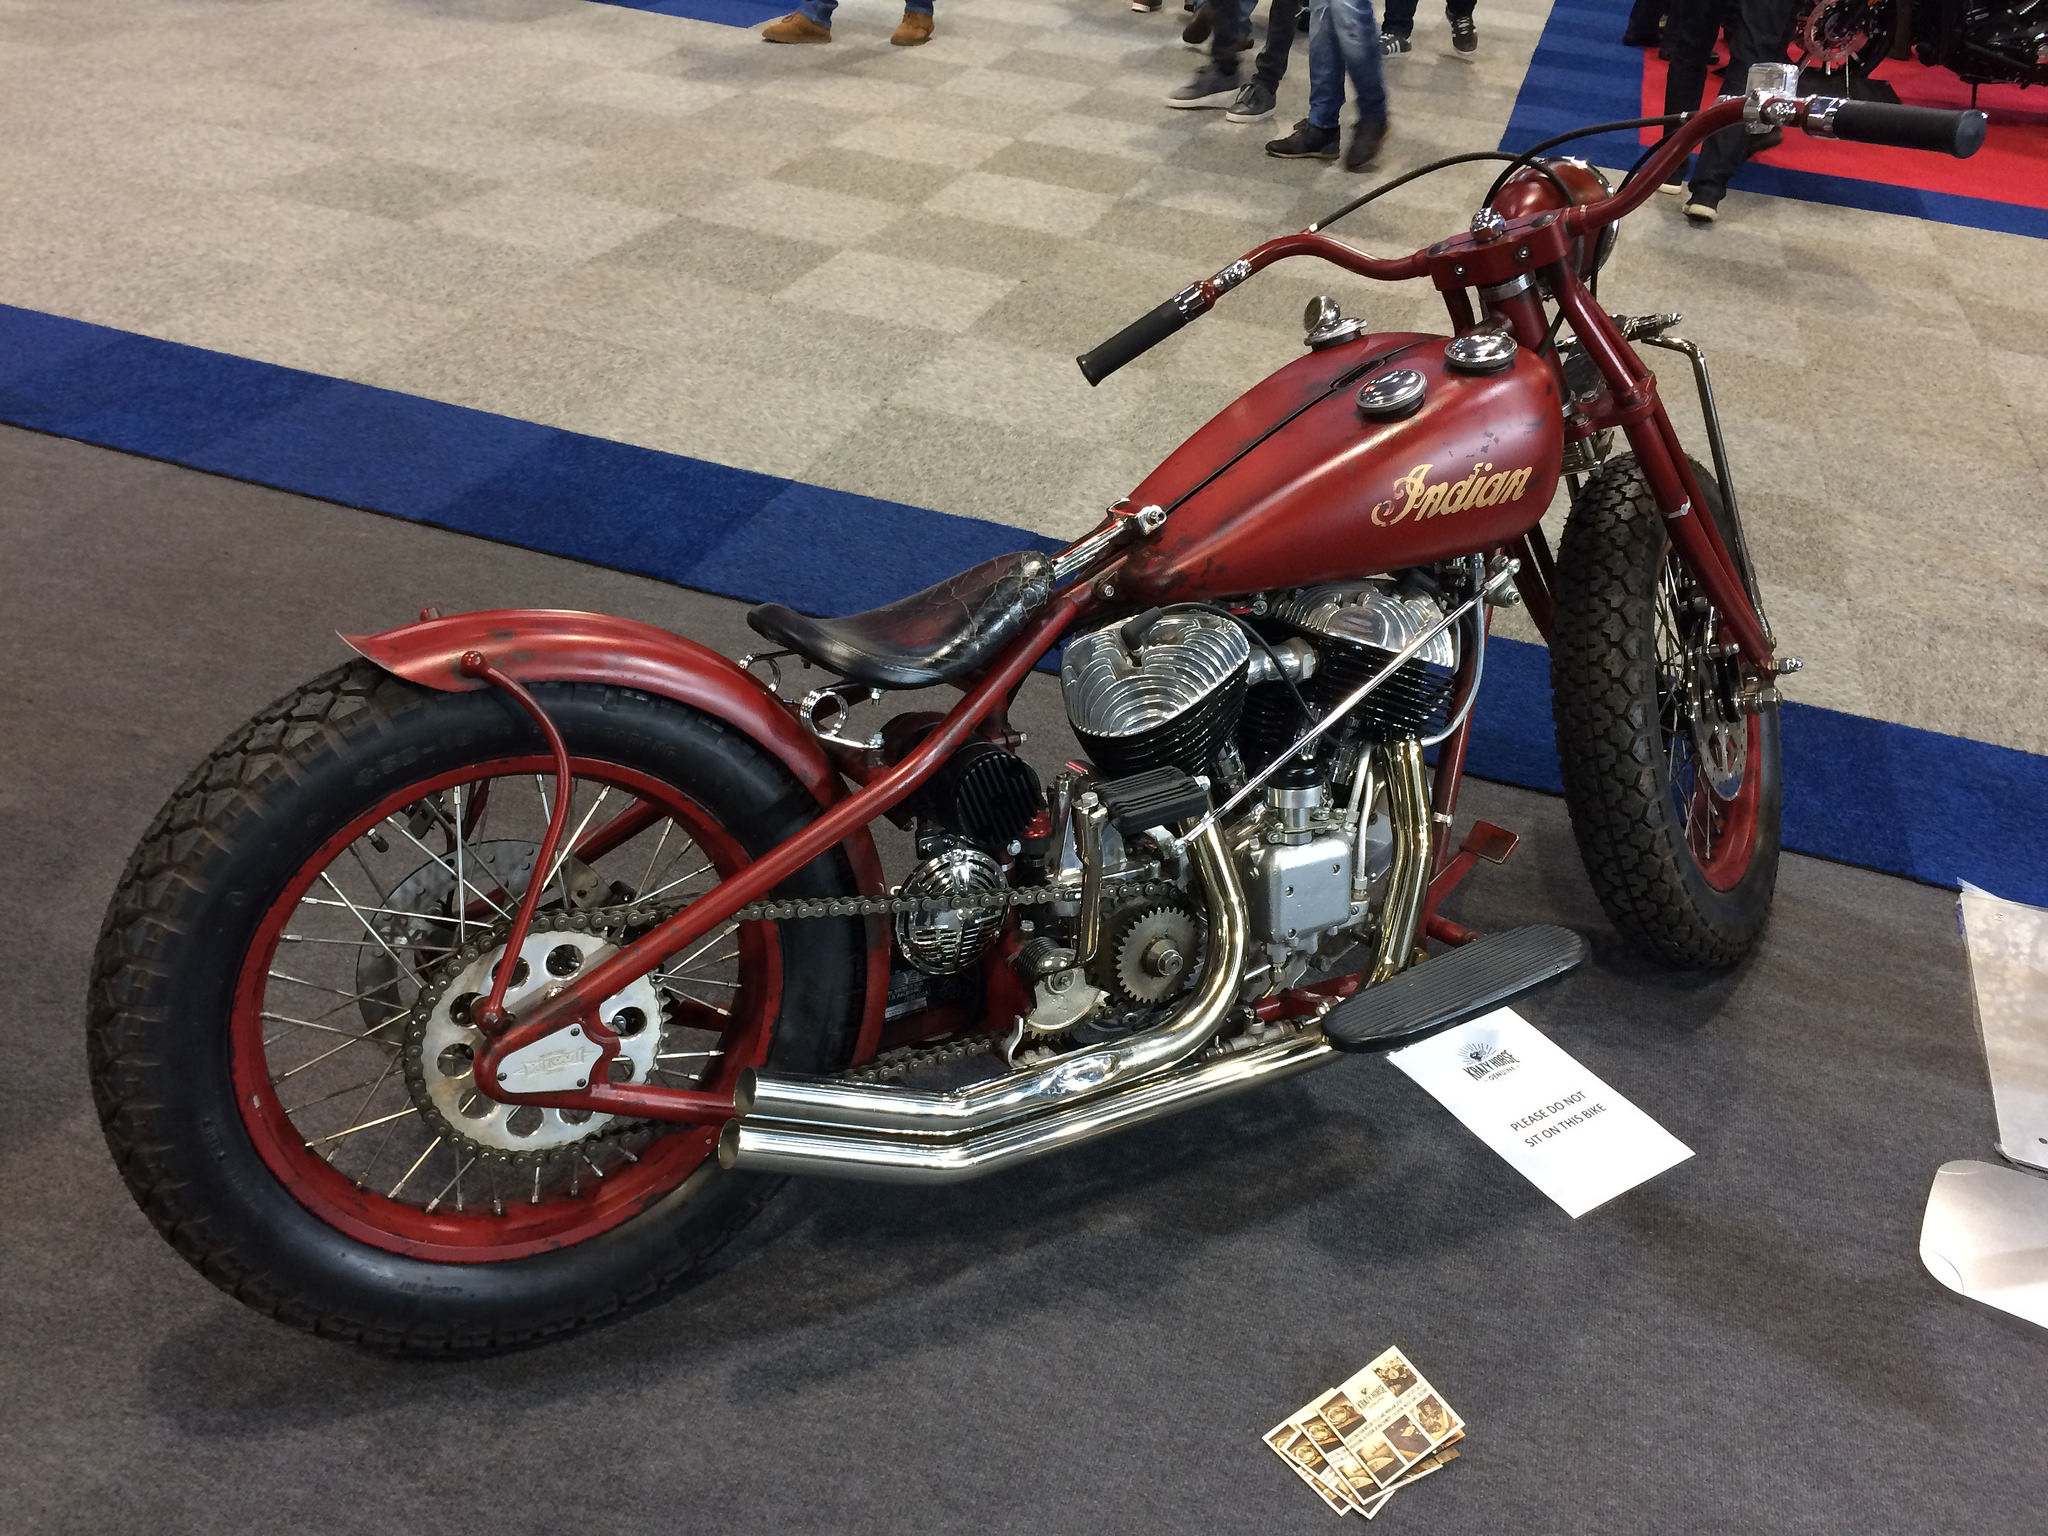 motorcycle show birmingham8 Motorcycle Show in National Exhibition Centre, Birmingham